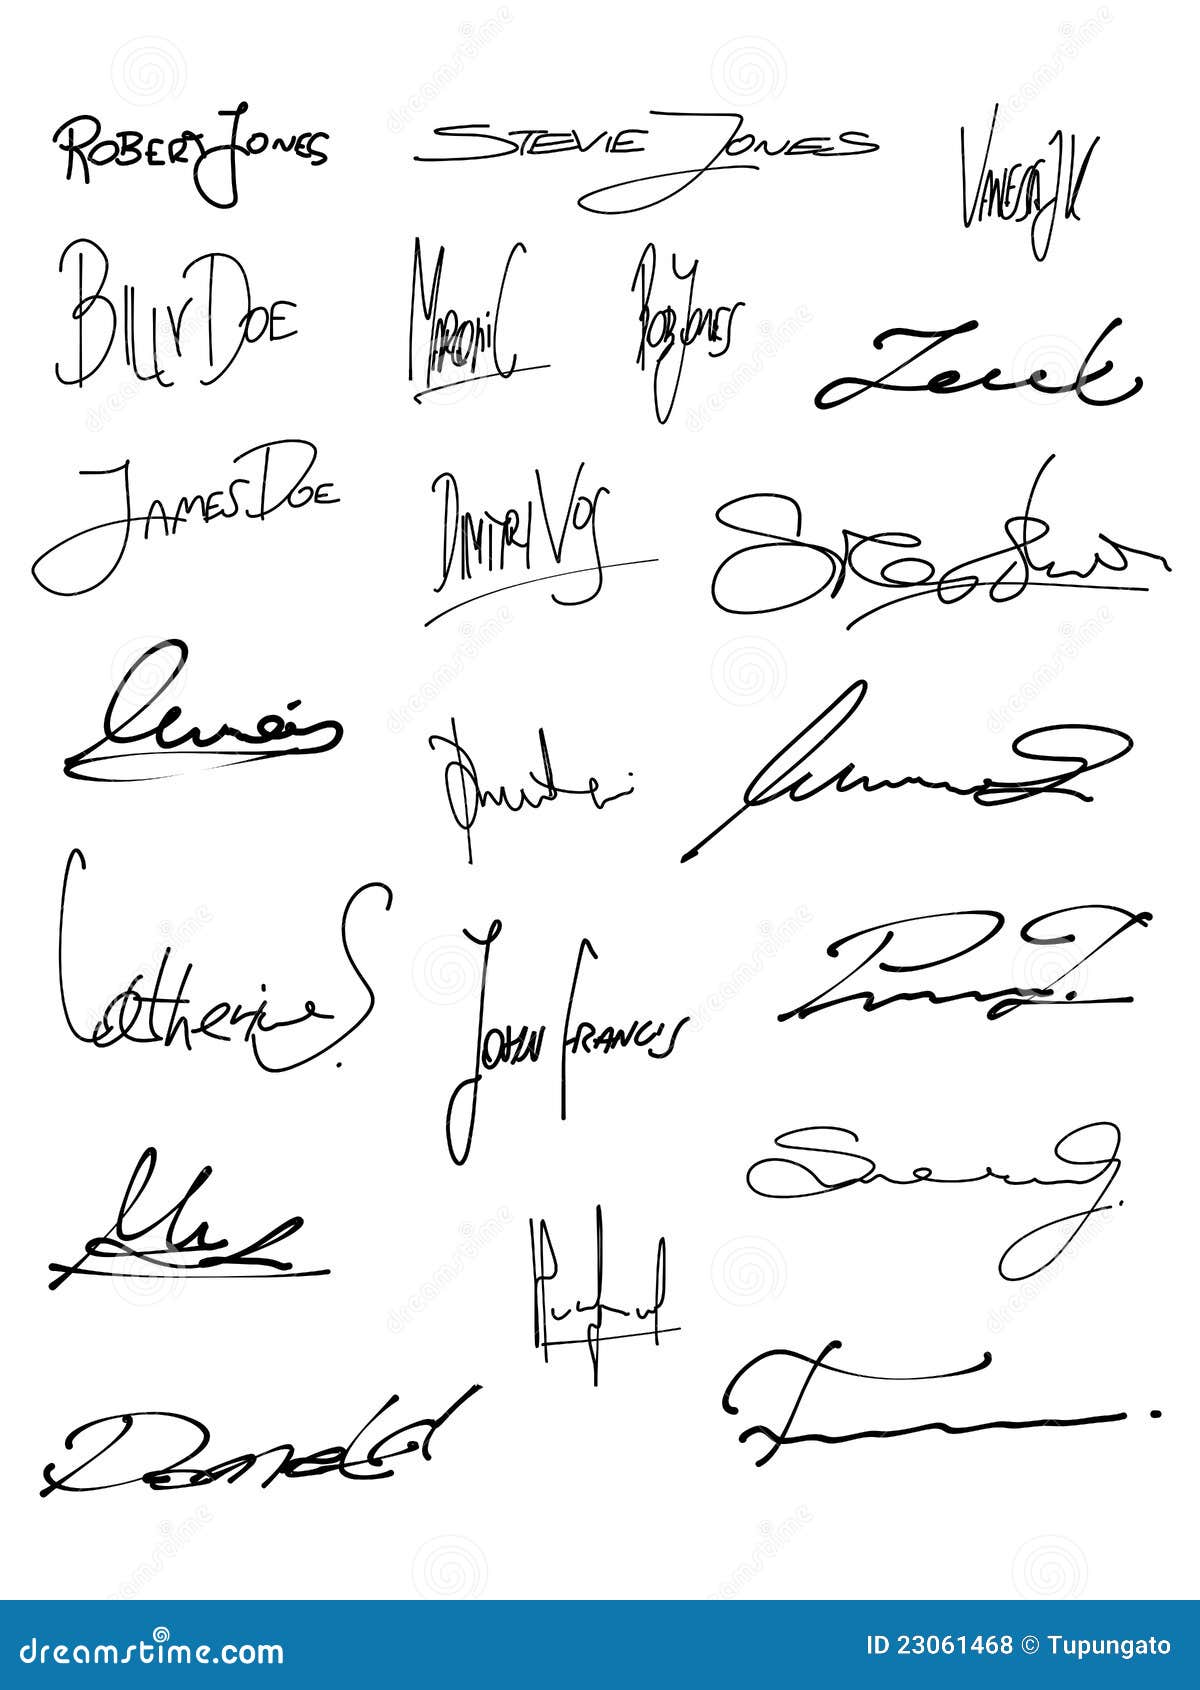 contract signature